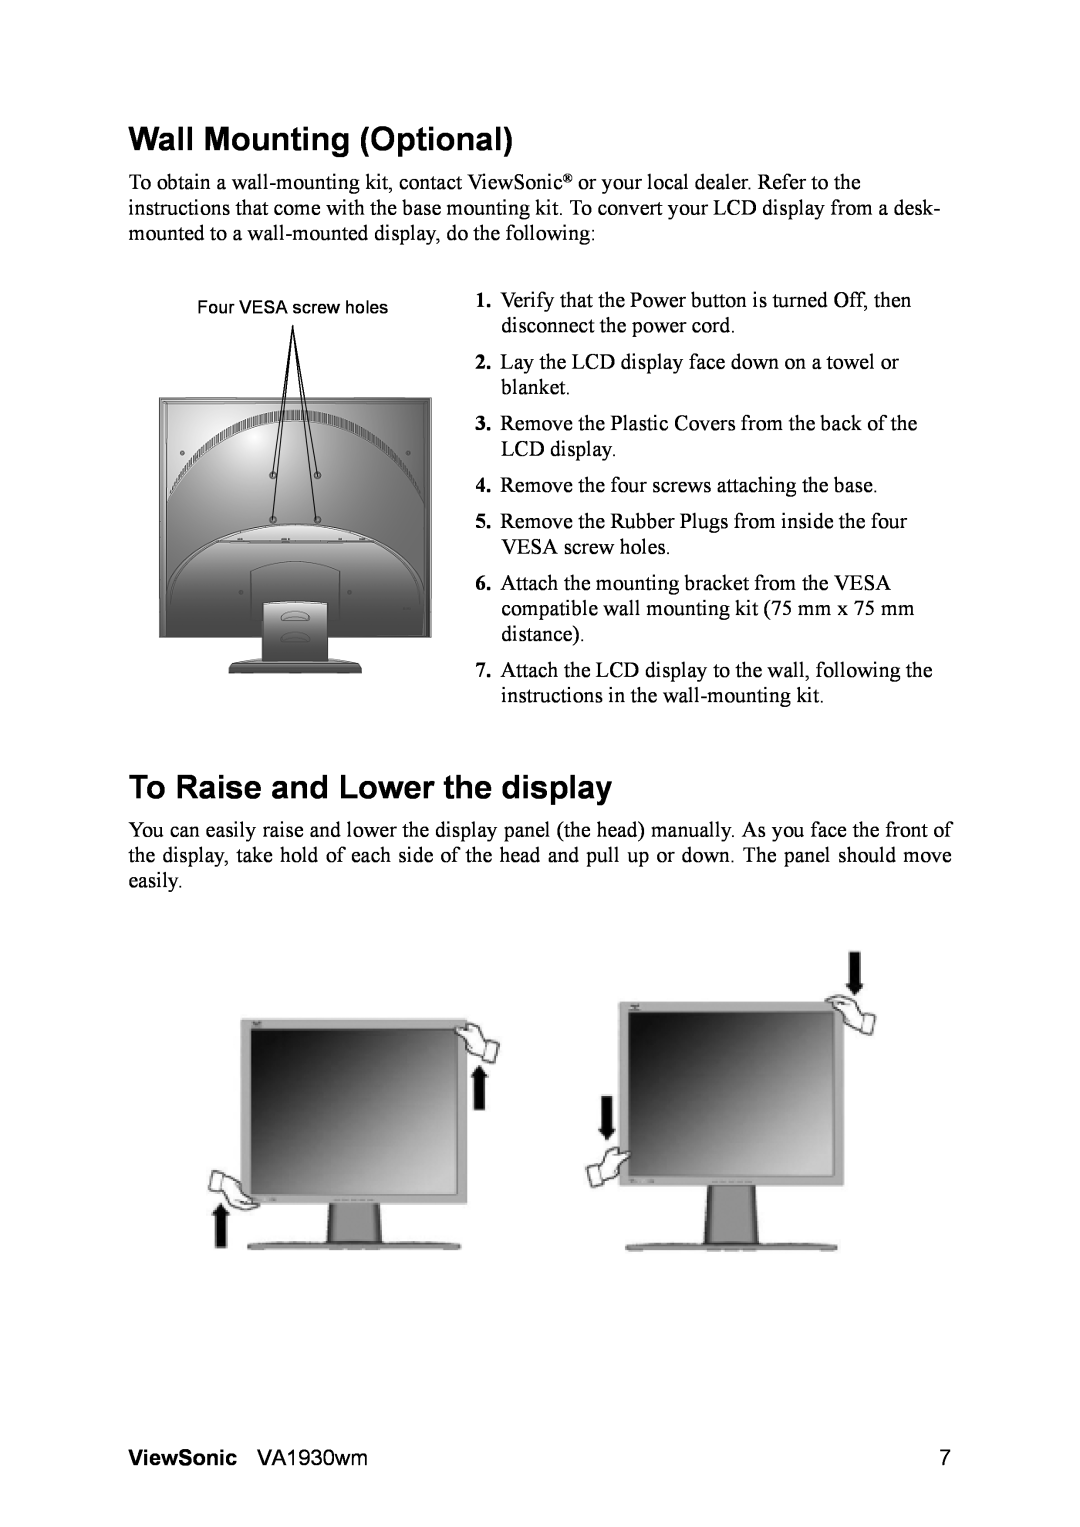 ViewSonic VS11419 manual Wall Mounting Optional, To Raise and Lower the display, ViewSonic VA1930wm 